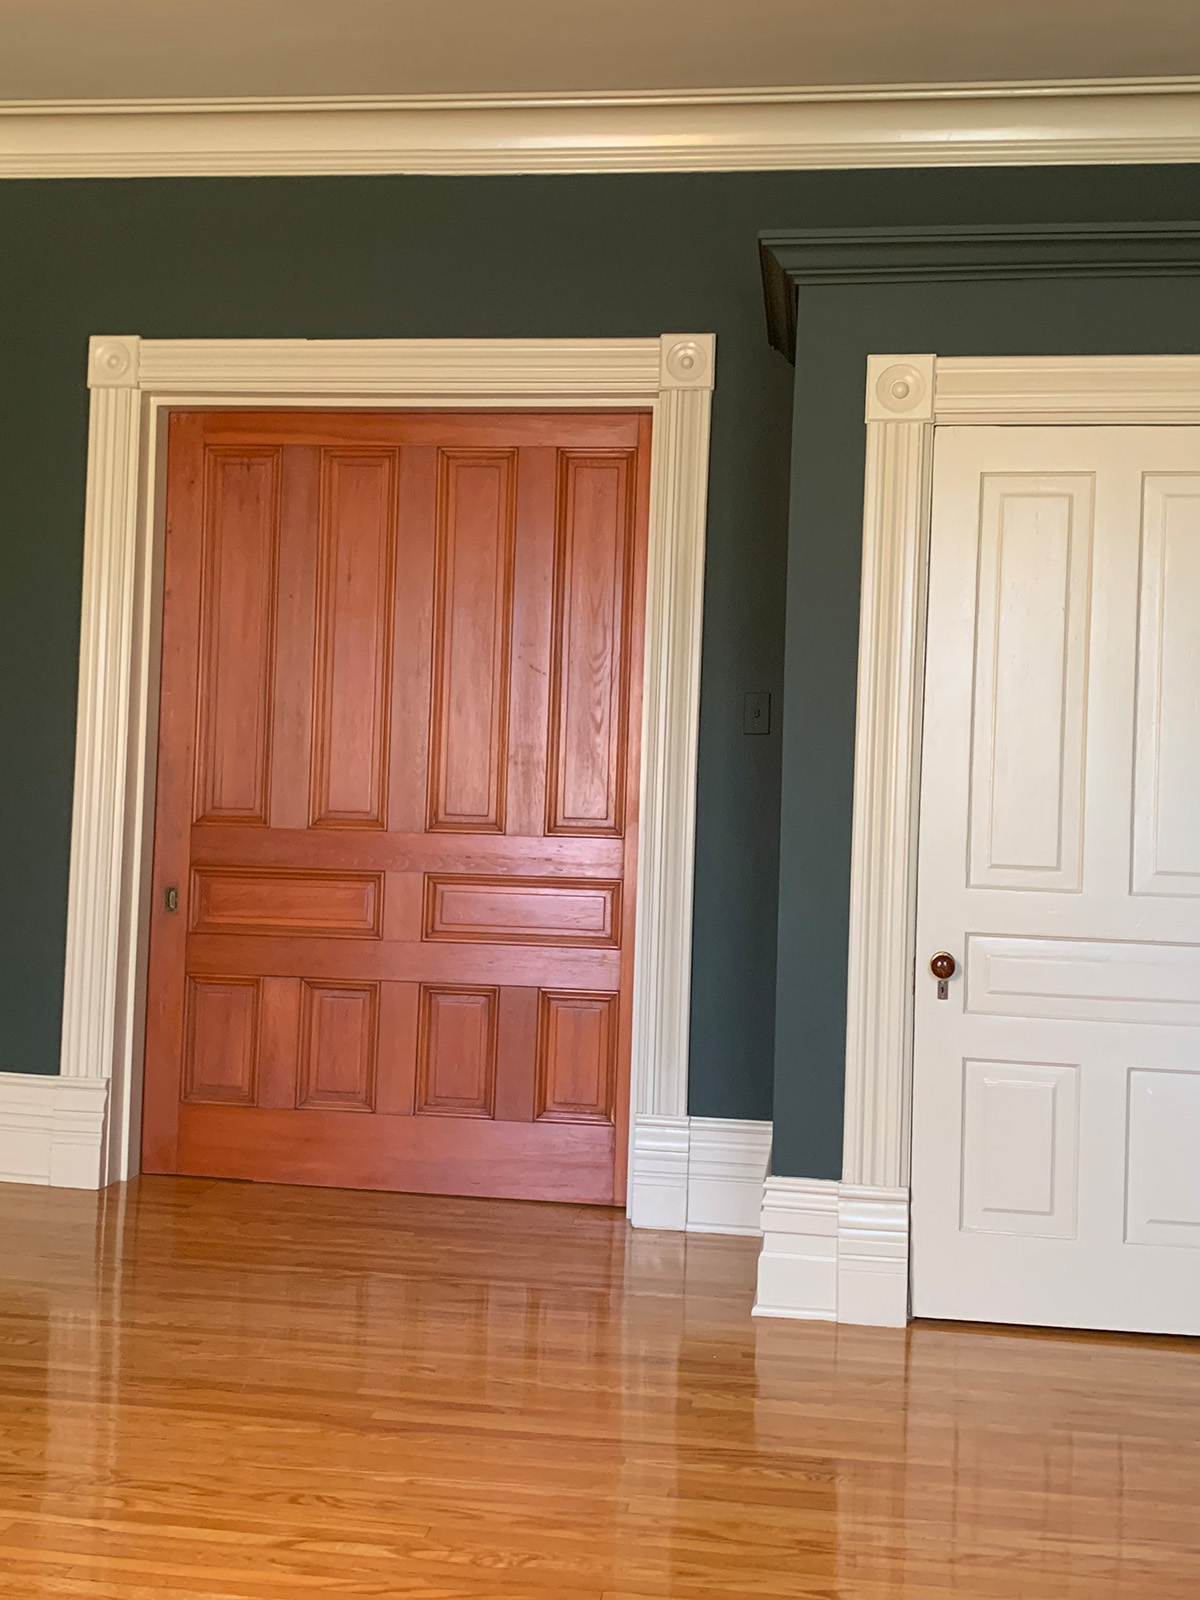 Restored Sliding Door Inside Victorian Home